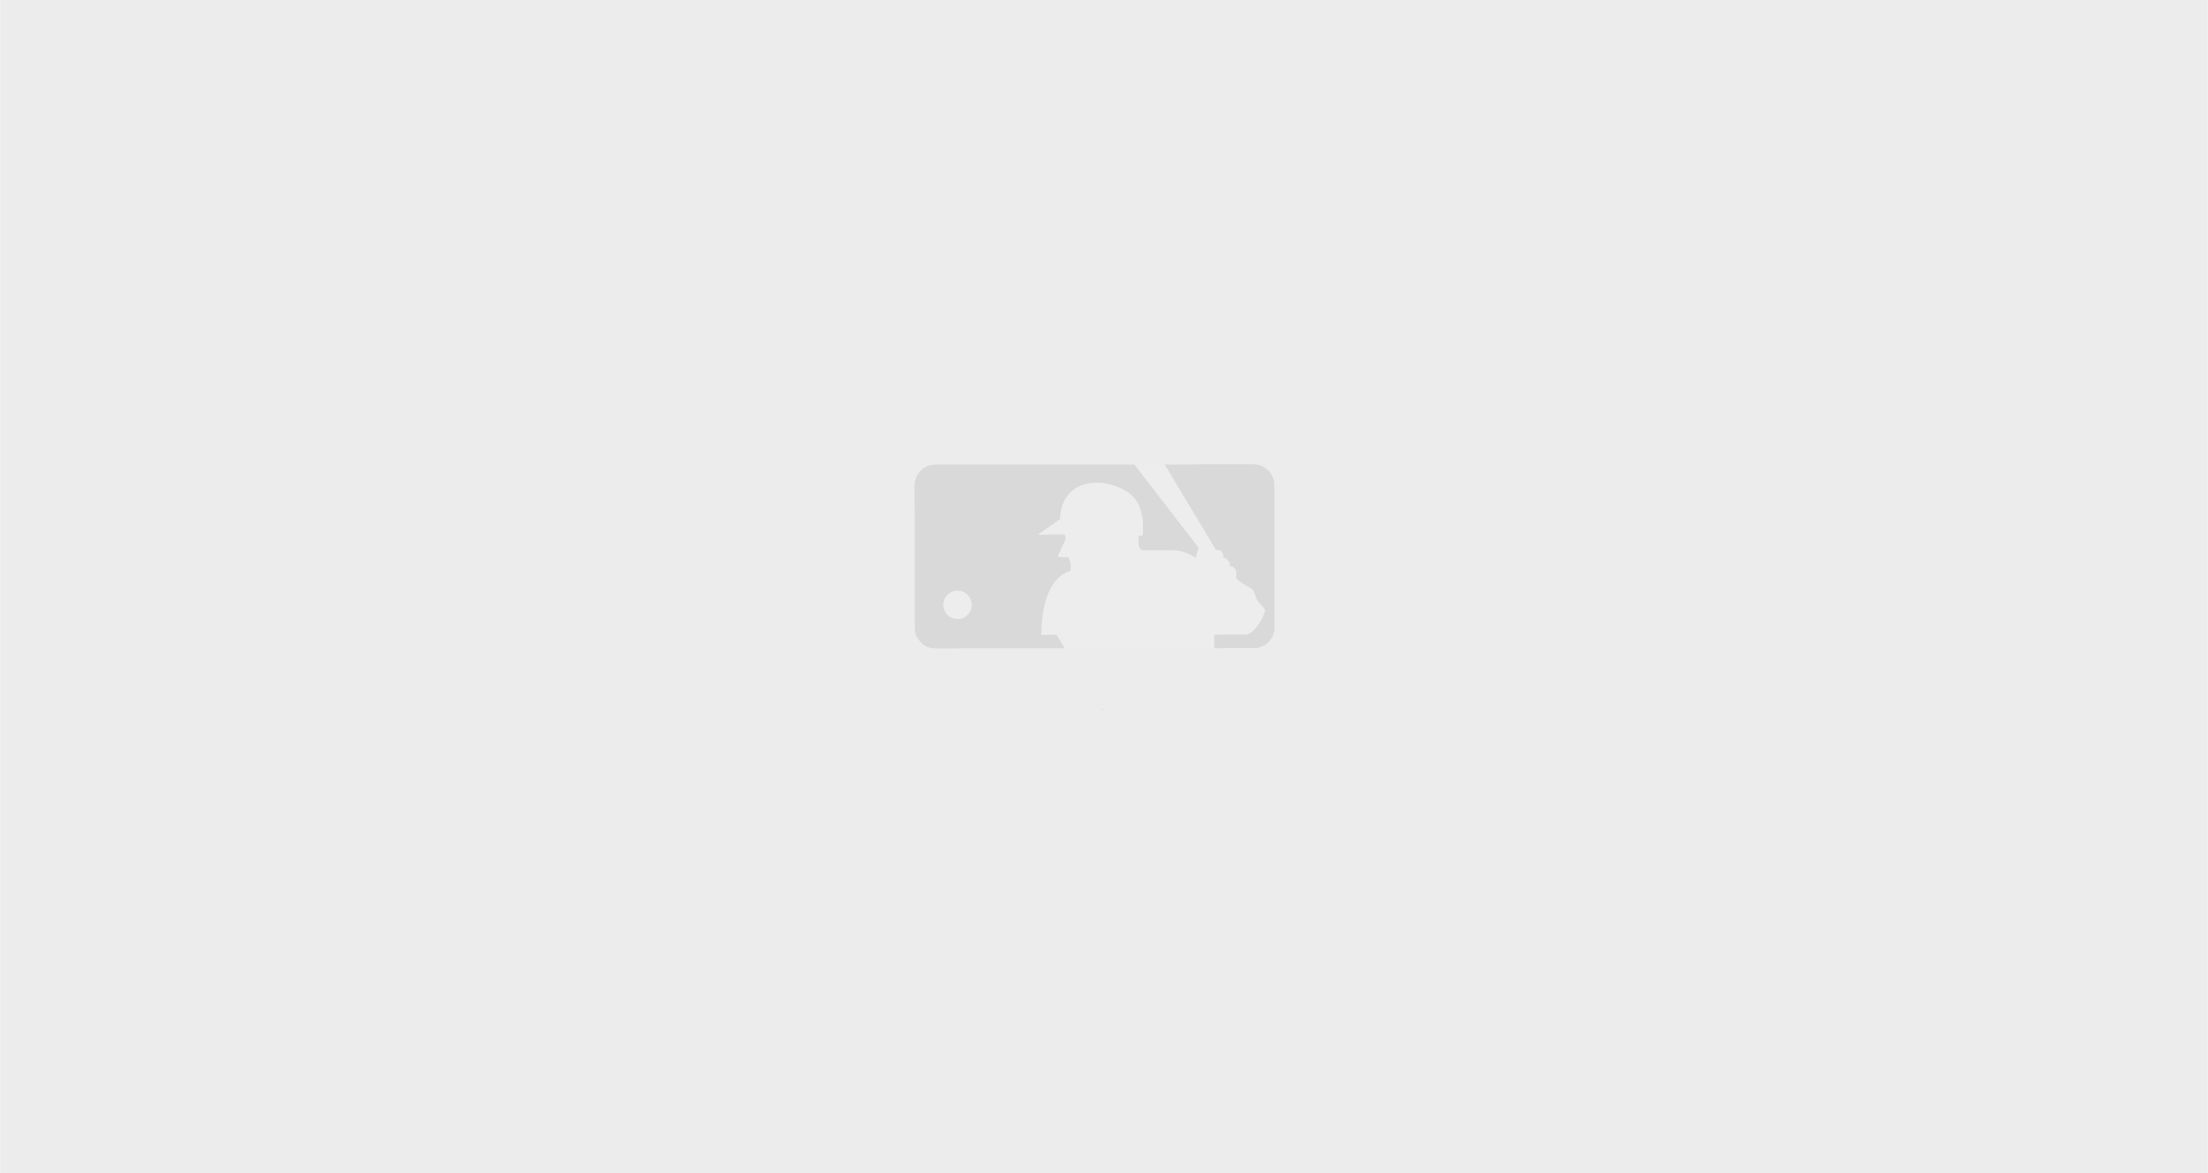 MLB Los Angeles Dodgers #42 Jackie Robinson Stadium Giveaway Jersey MEN  SIZE Med